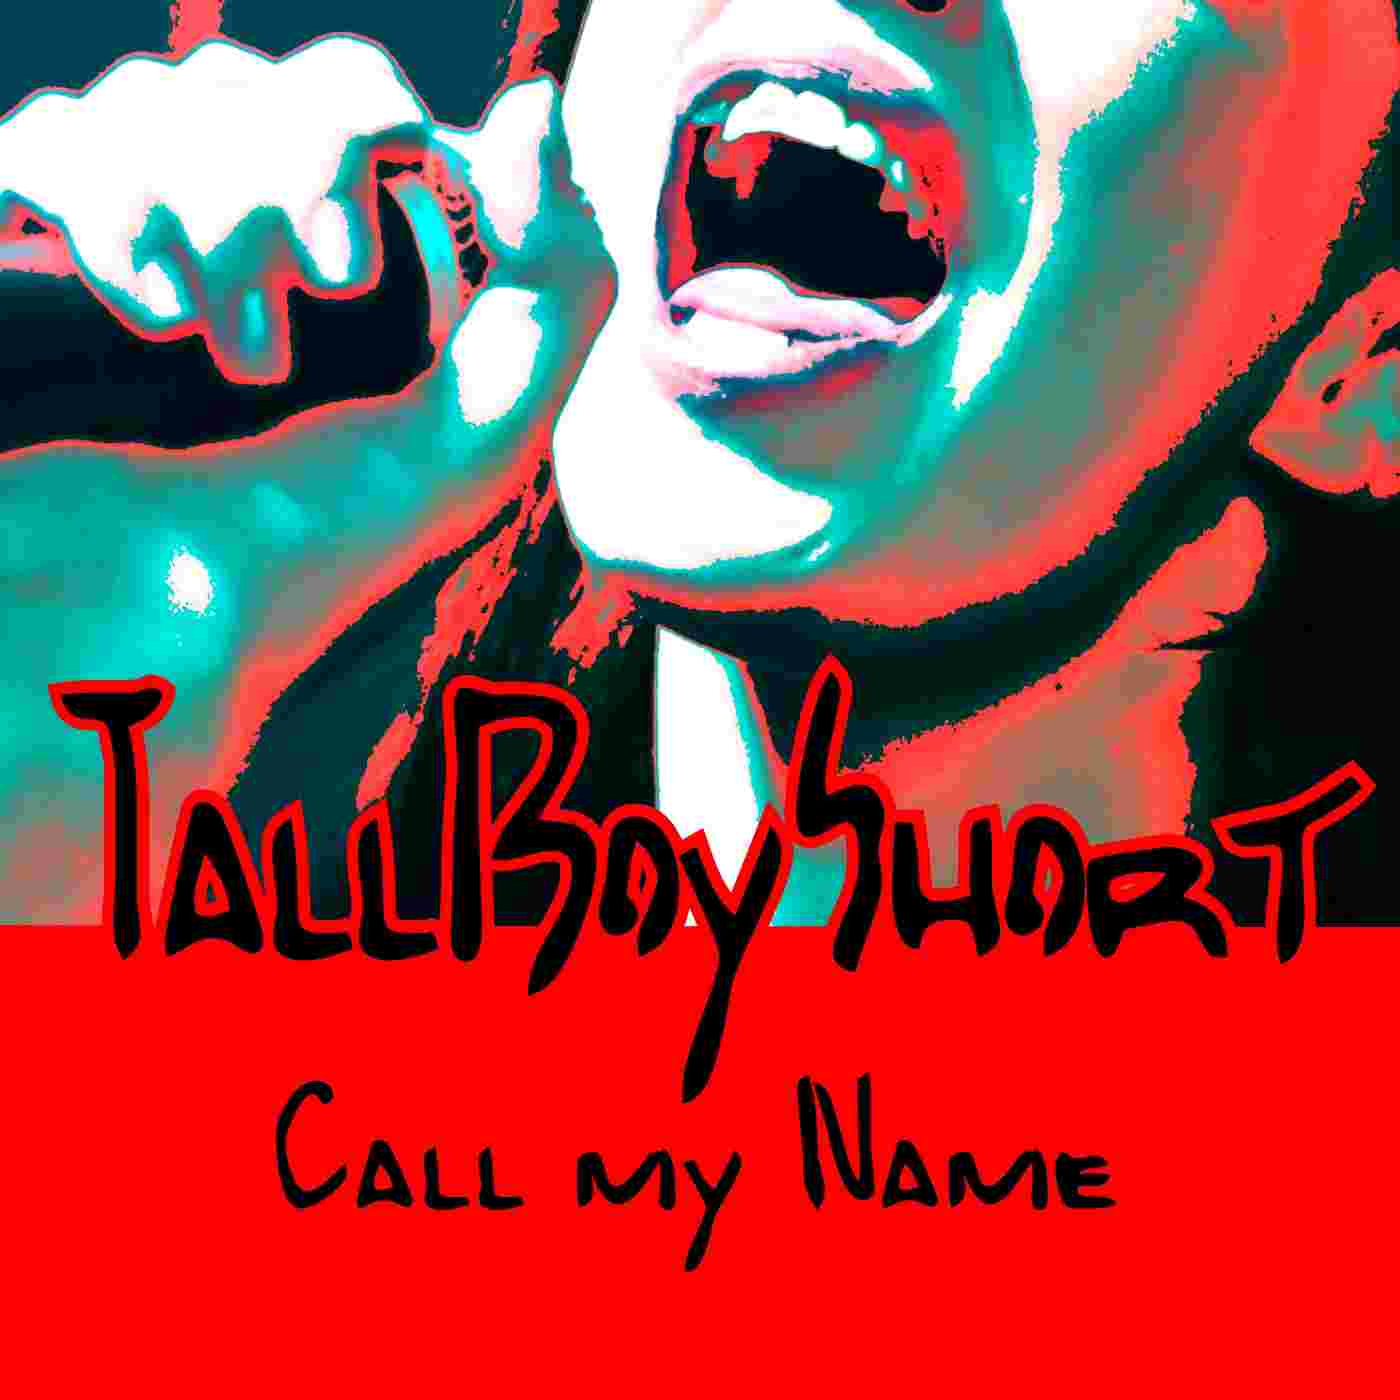 TallBoyShort Call My Name